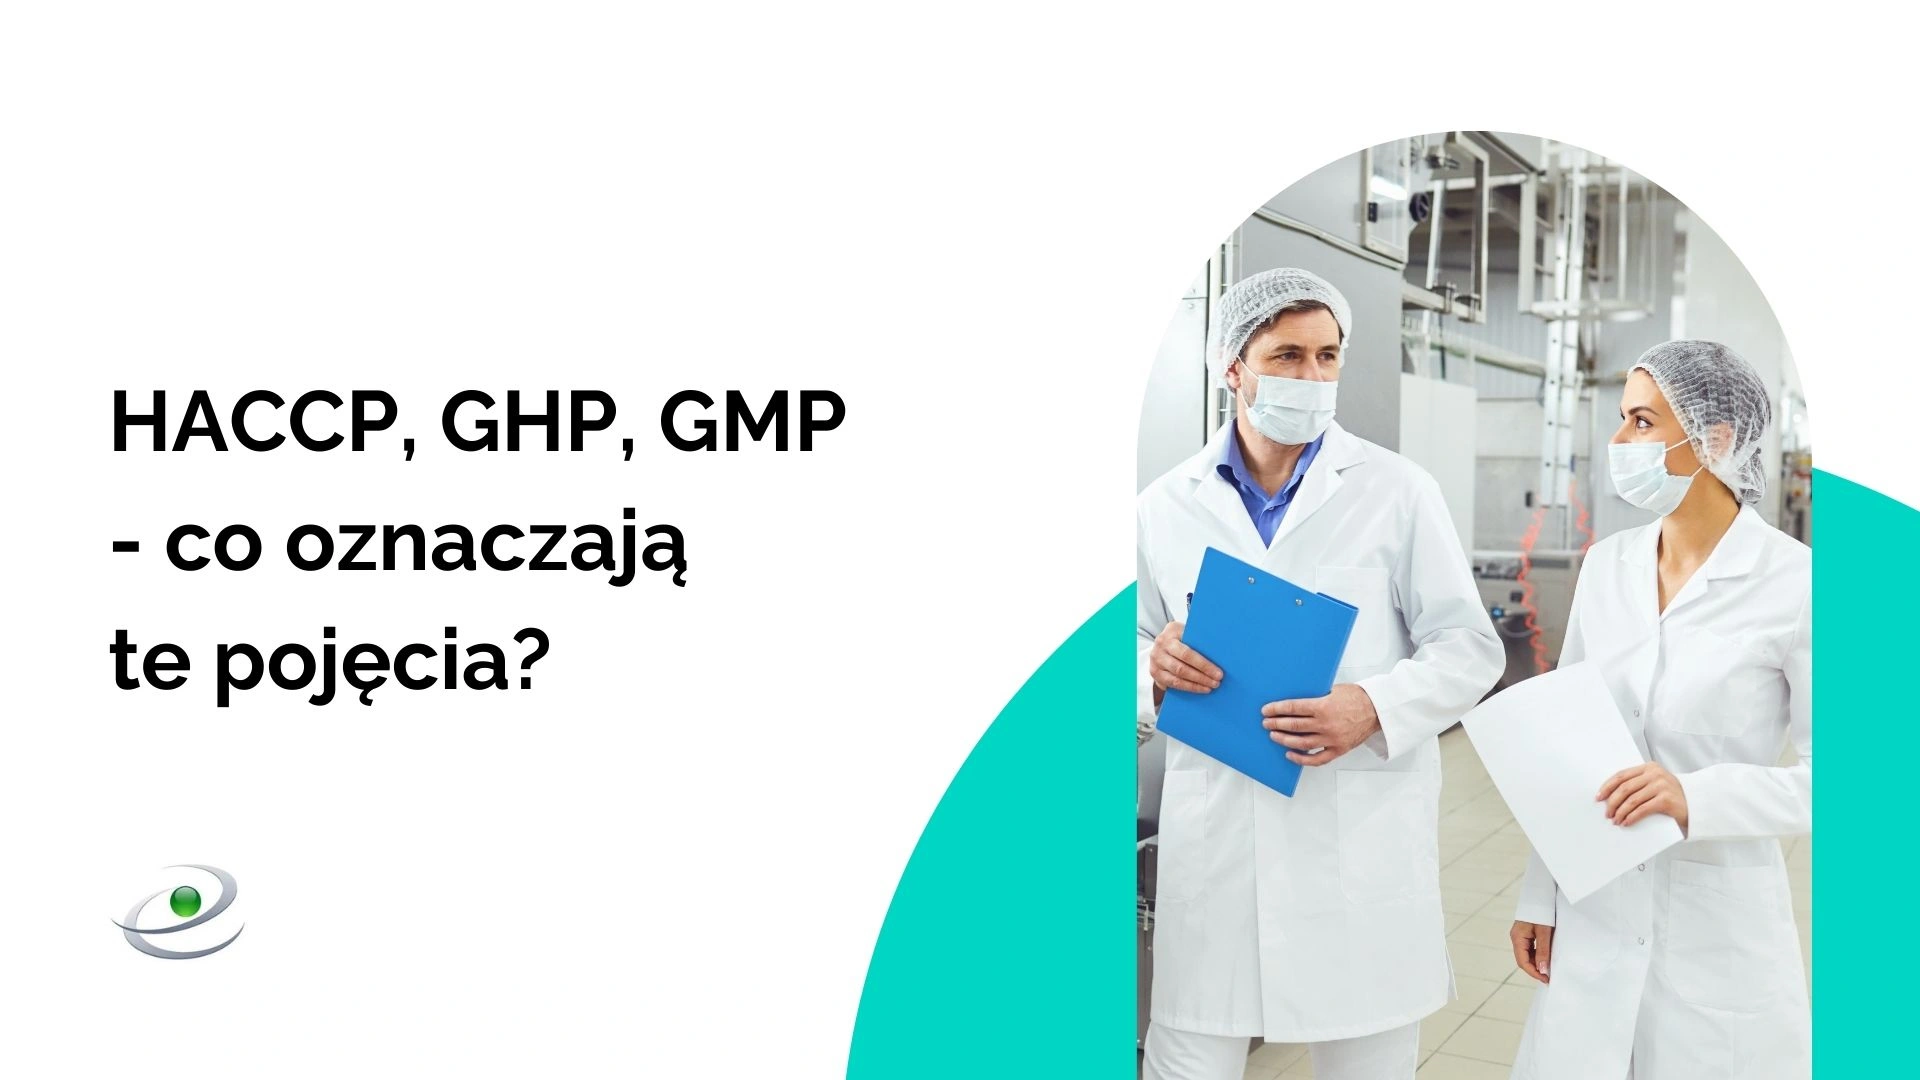 HACCP, GHP, GMP - co oznaczają pojecią?